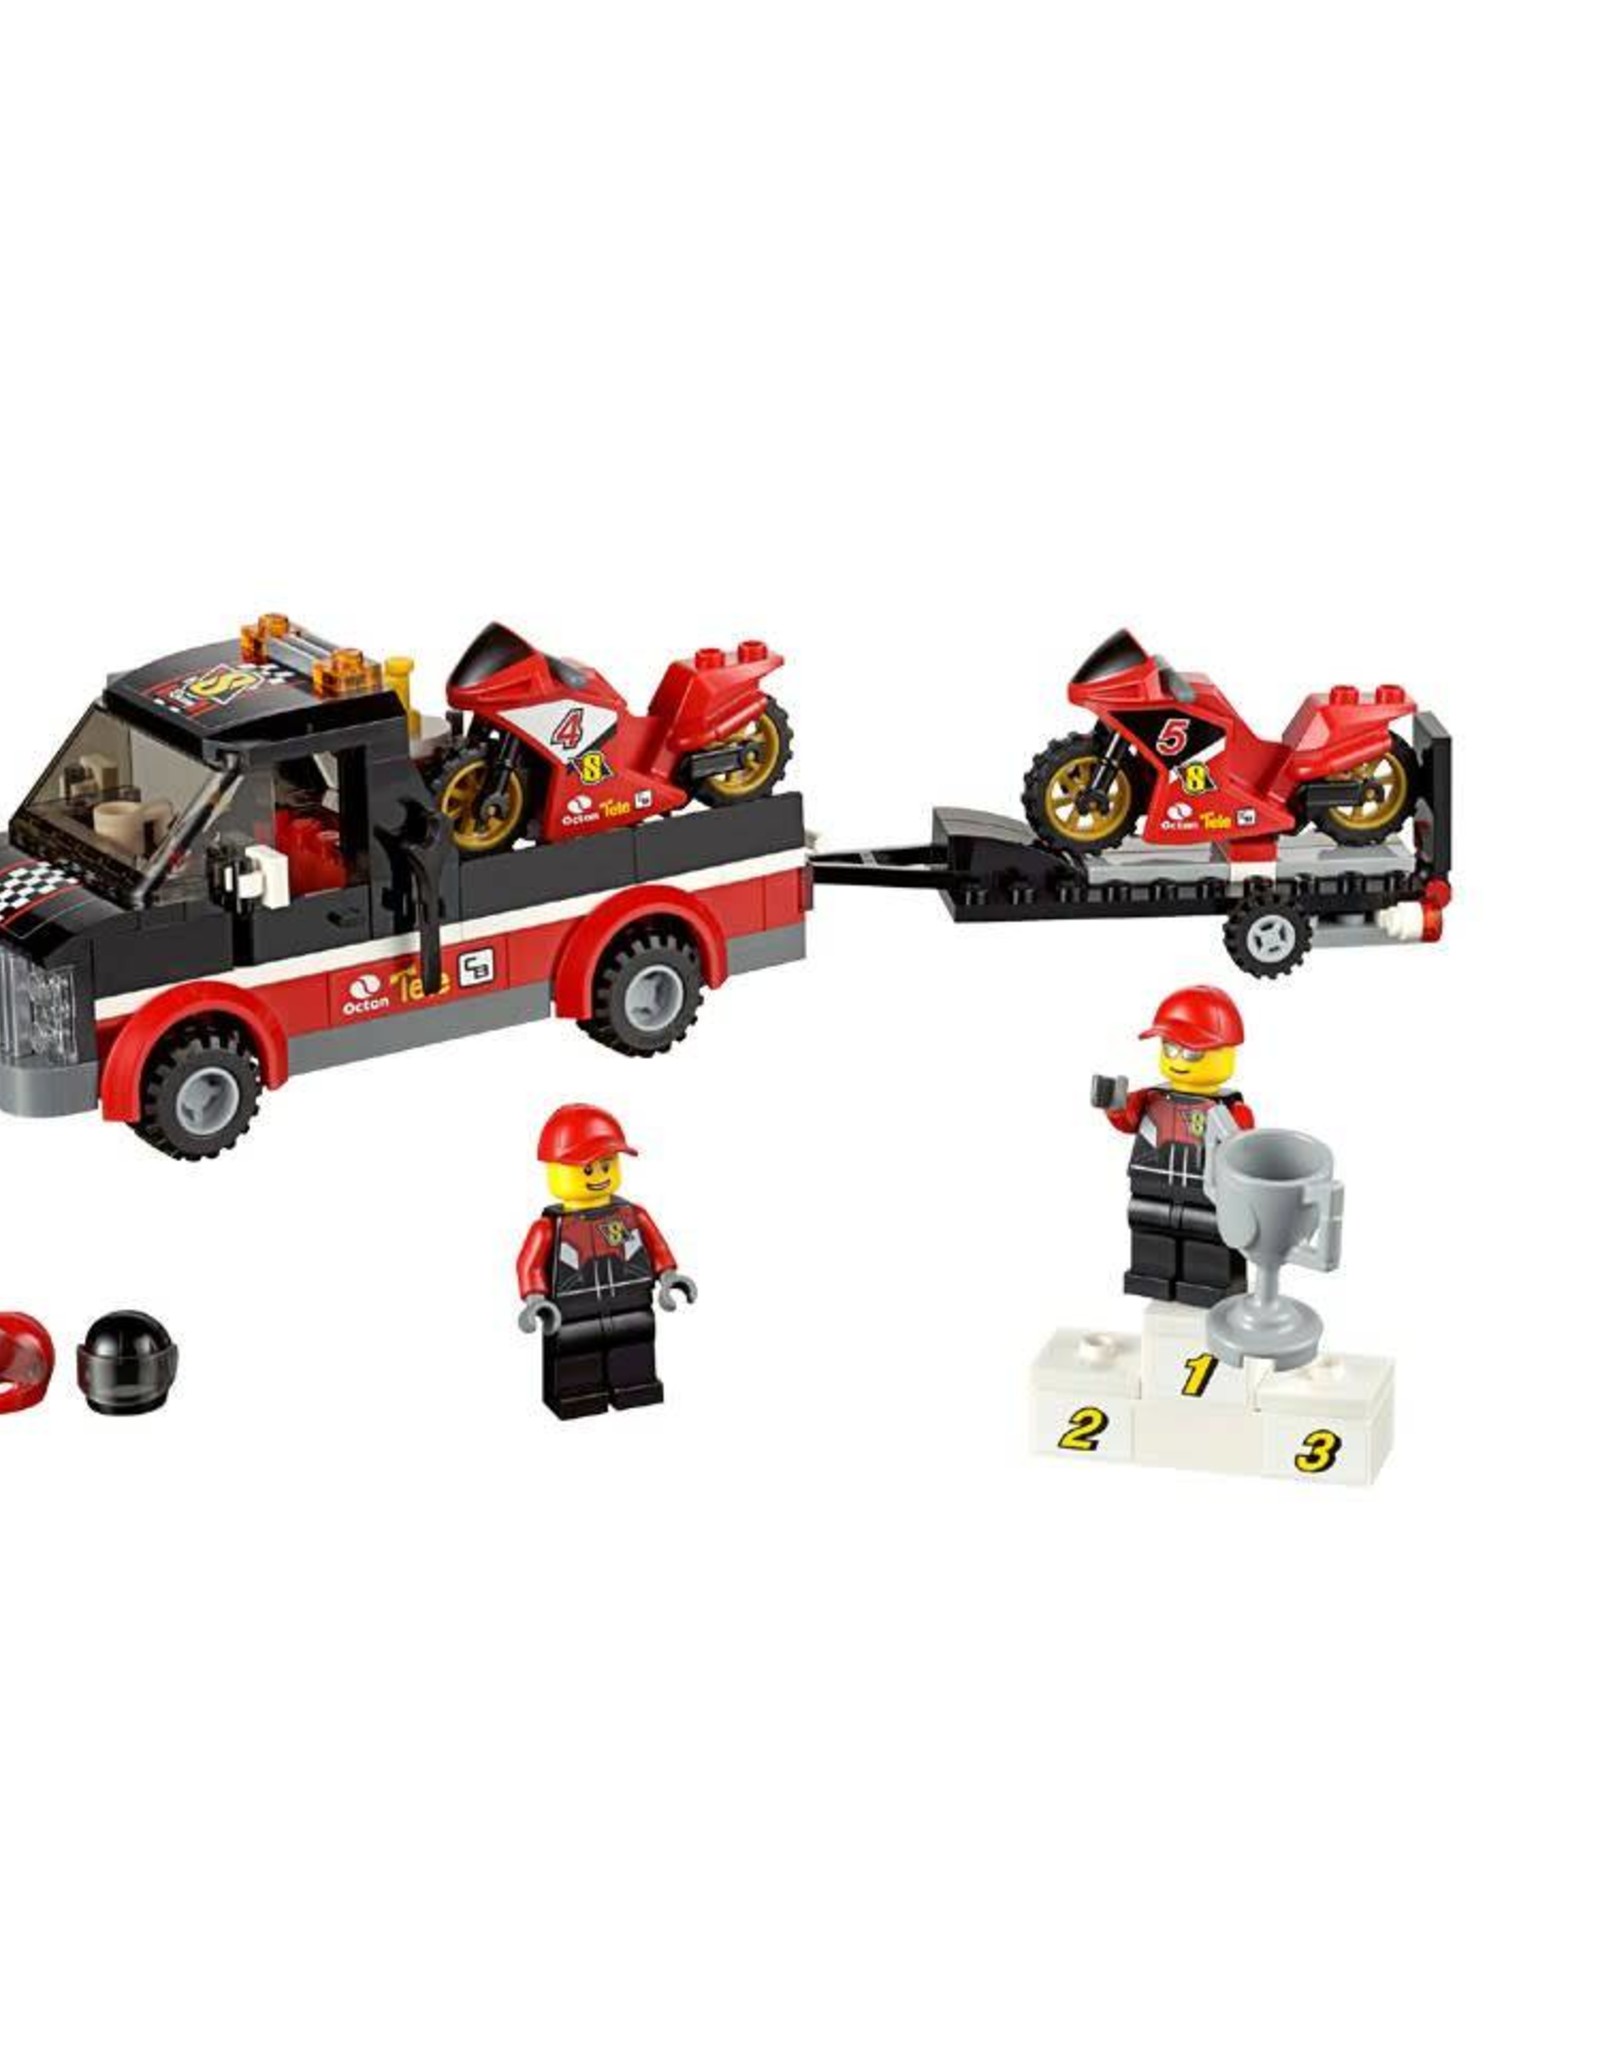 LEGO LEGO 60084 Race Motors CITY